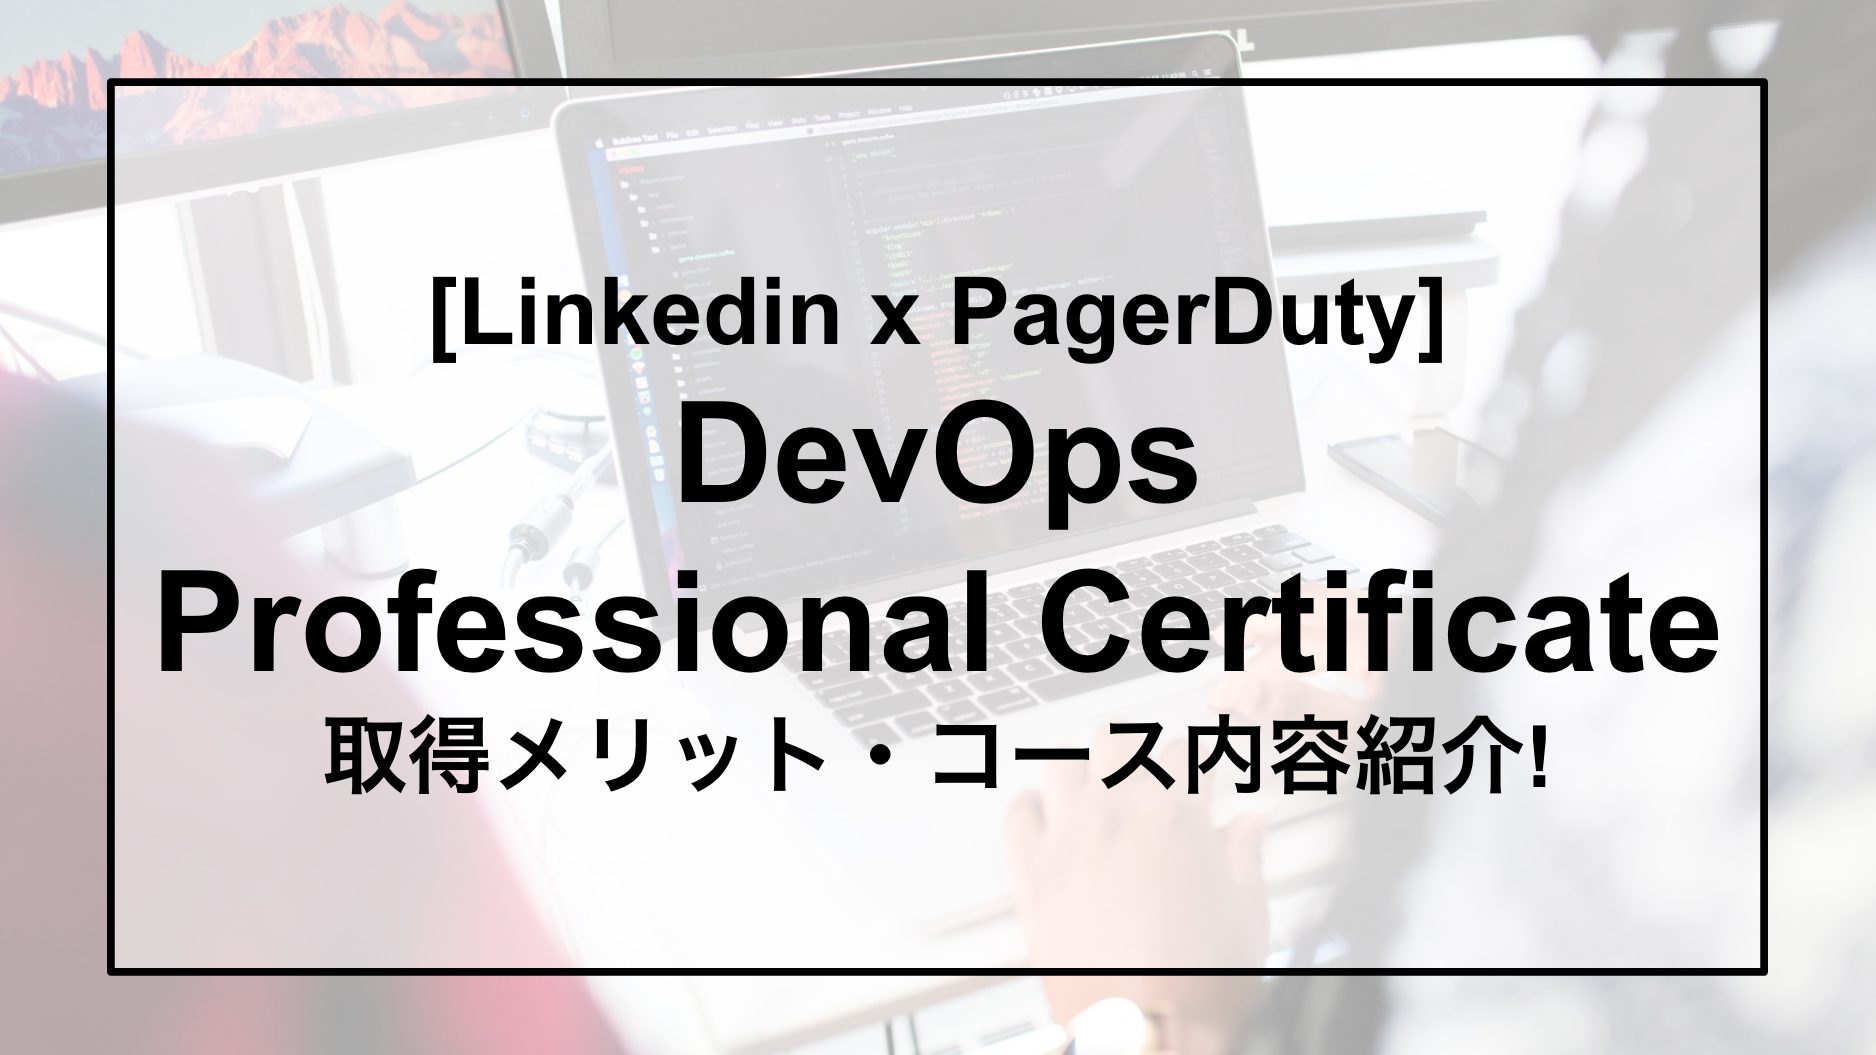 LinkedIn x PagerDuty! 「DevOps Professional Certificate」 取得メリット・コースのご紹介